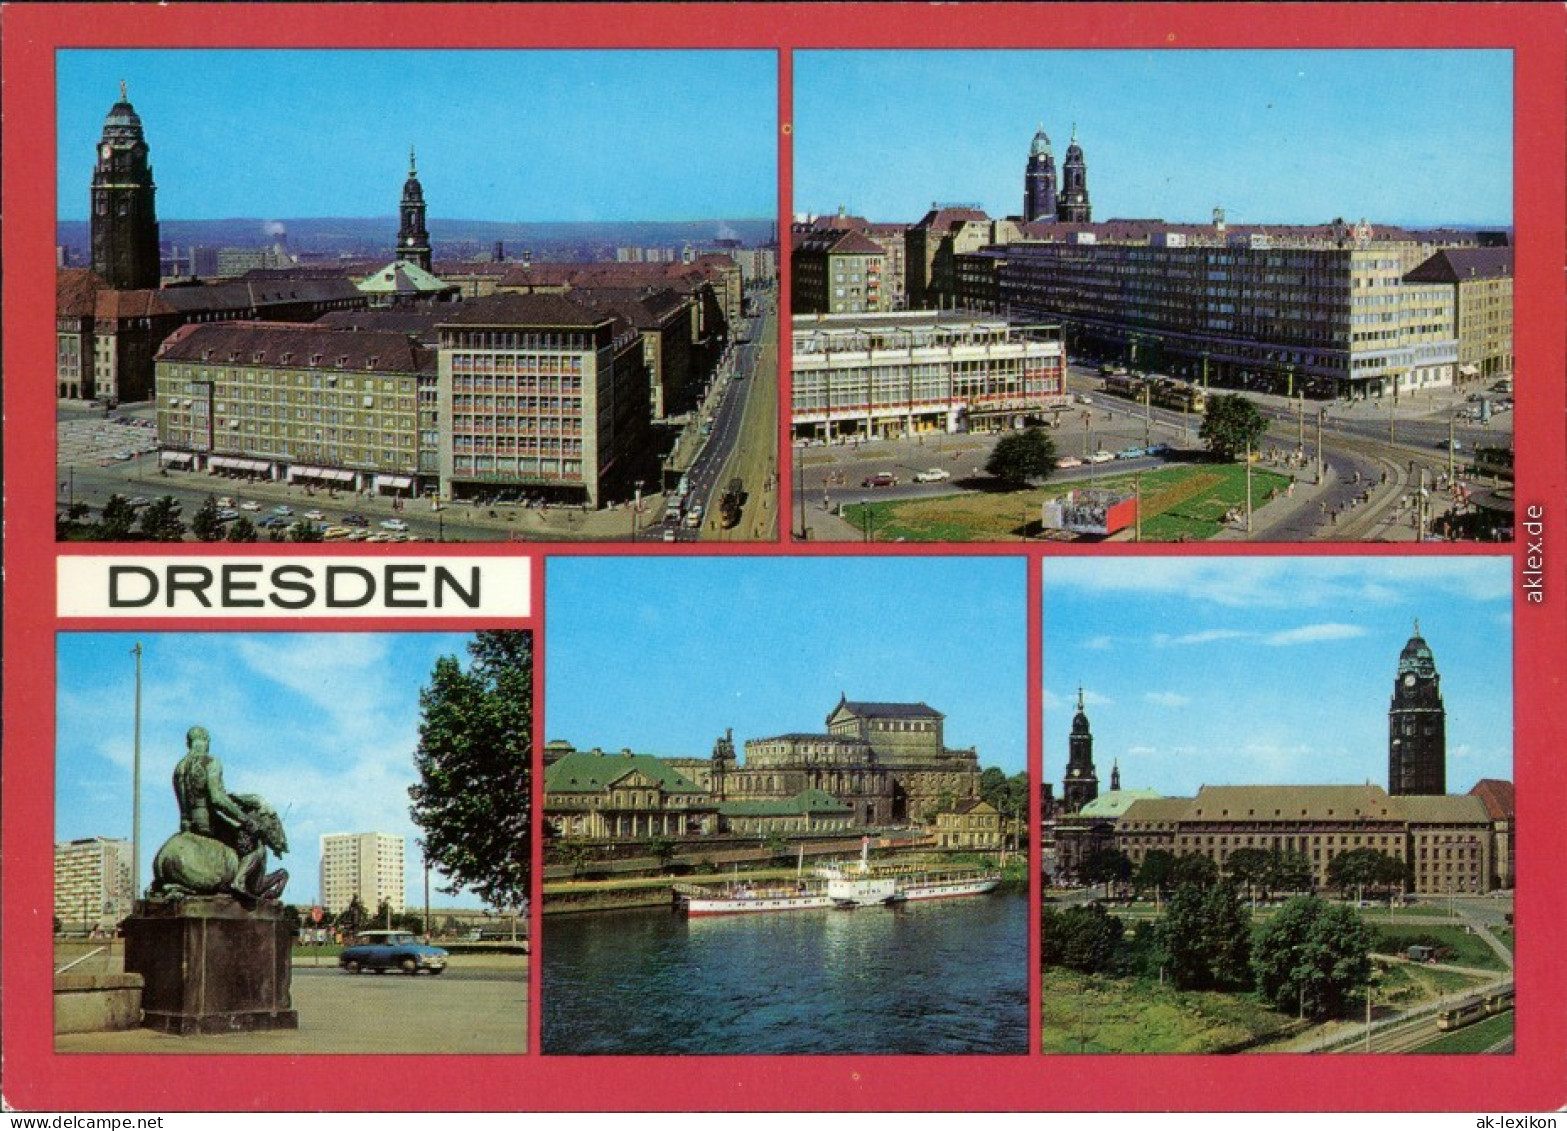 Innere Altstadt-Dresden Ernst-Thälmann Straße/Pirnaischer Platz, Postplatz 1986 - Dresden